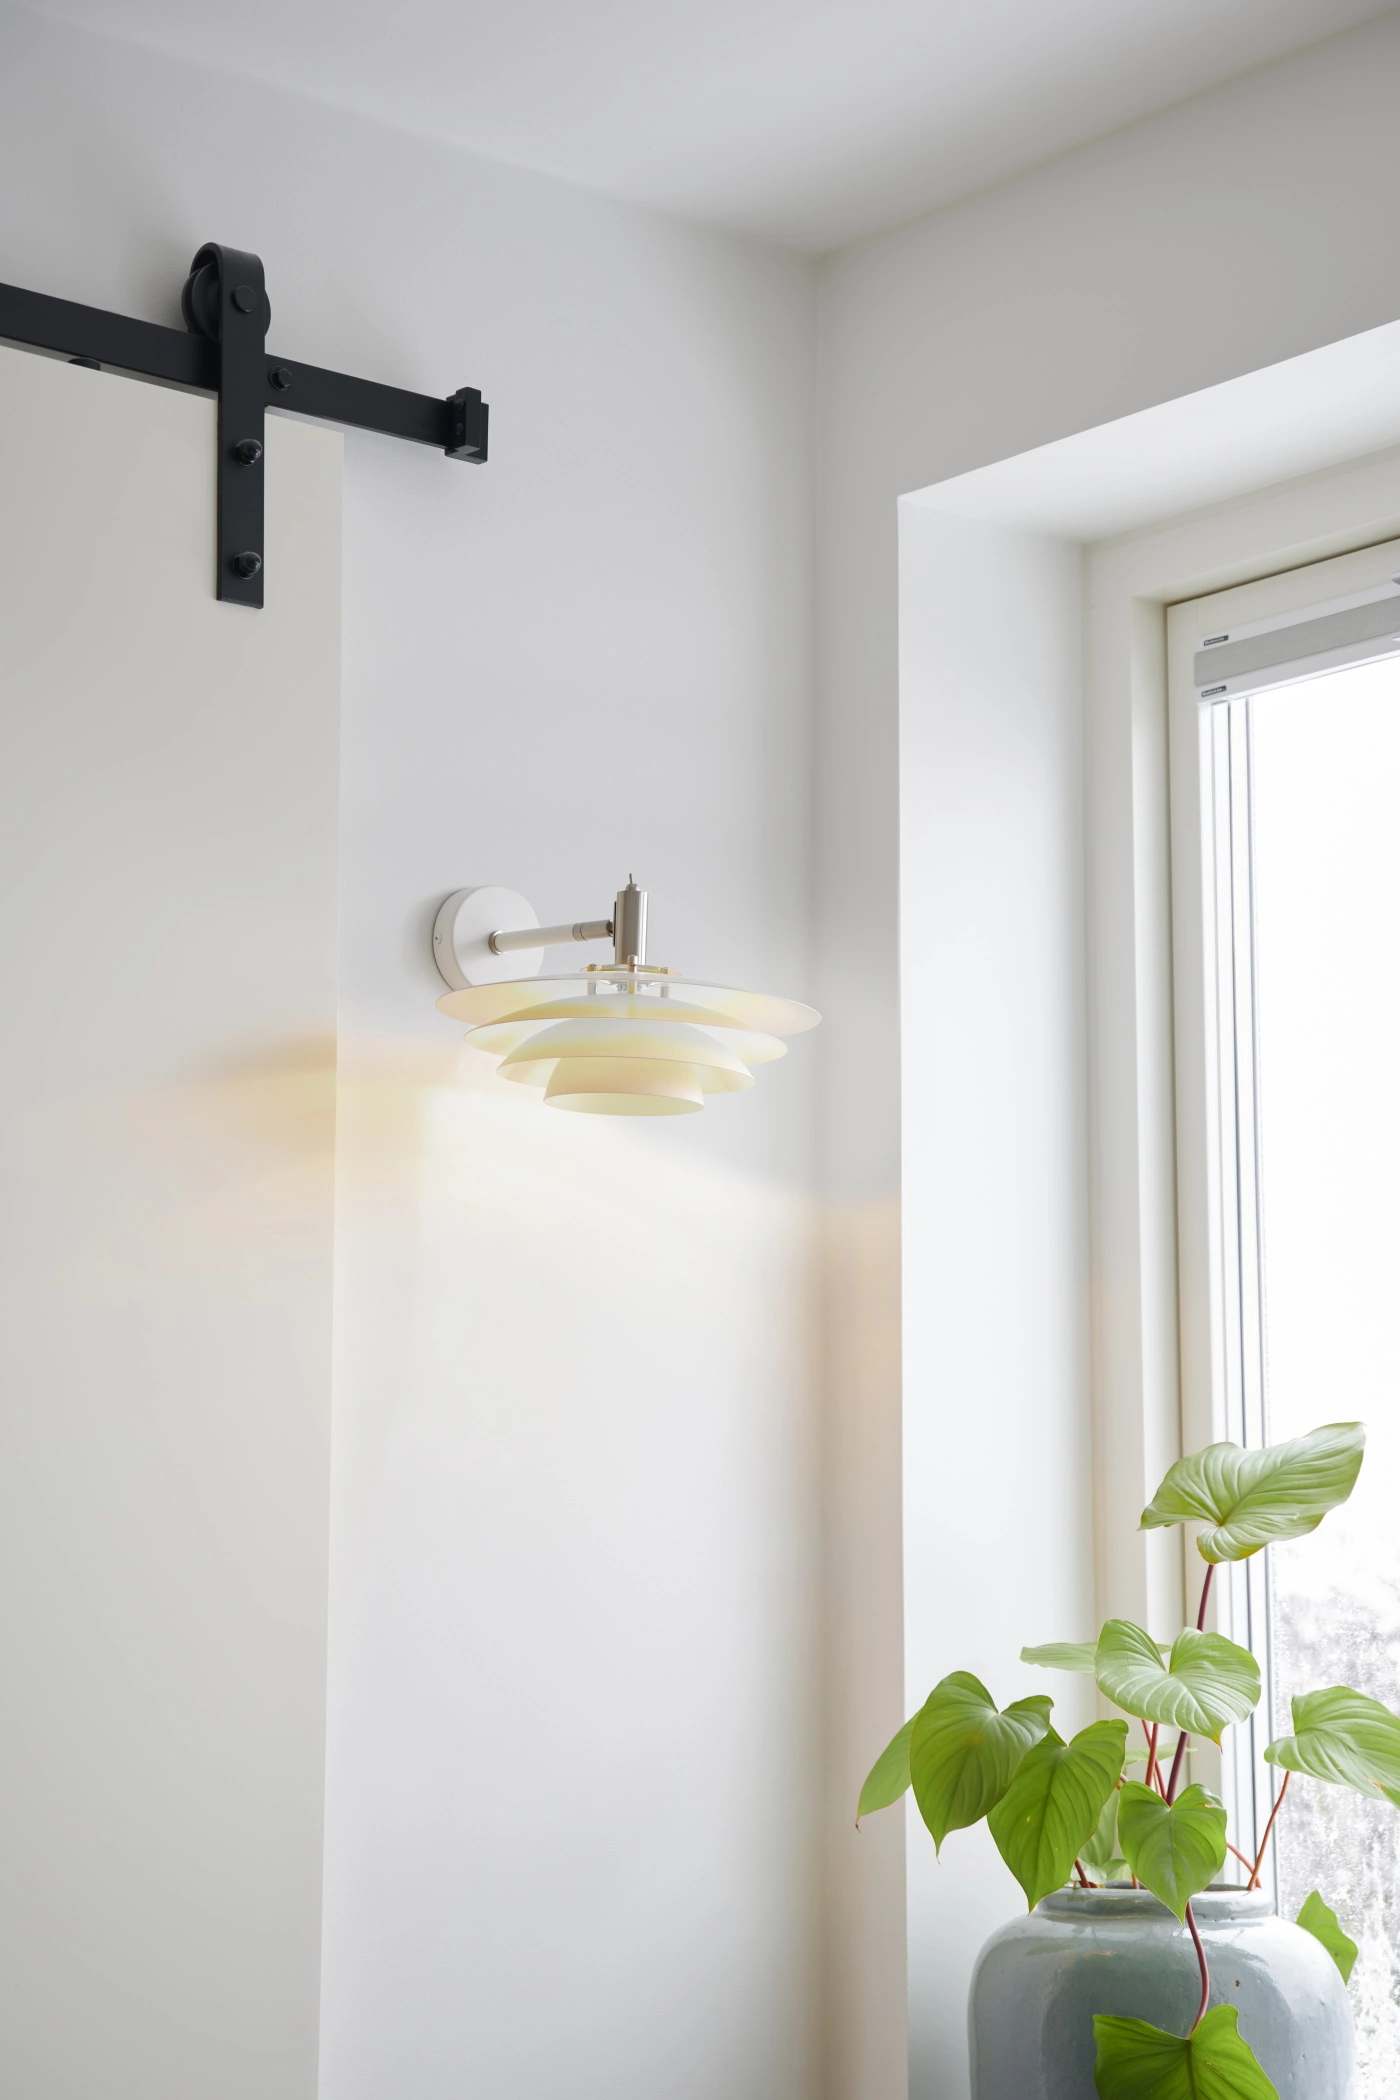   
                        Бра NORDLUX  (Дания) 52438    
                         в стиле Модерн, Хай-тек.  
                        Тип источника света: светодиодная лампа, сменная.                                                 Цвета плафонов и подвесок: Белый.                         Материал: Металл.                          фото 4